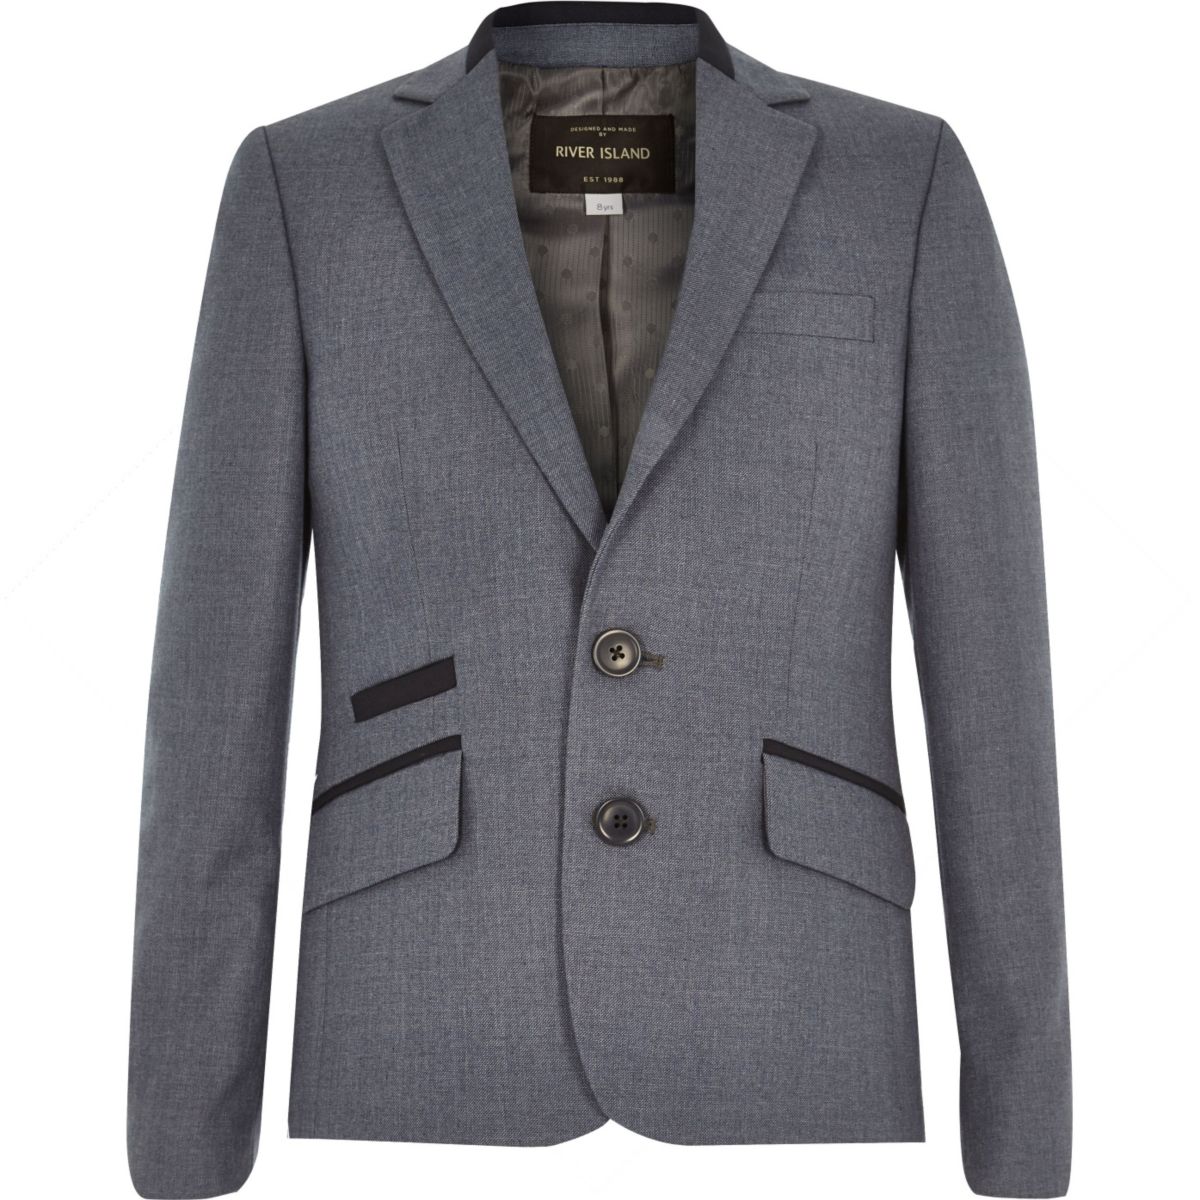 Boys navy suit jacket - Occasionwear - Sale - boys